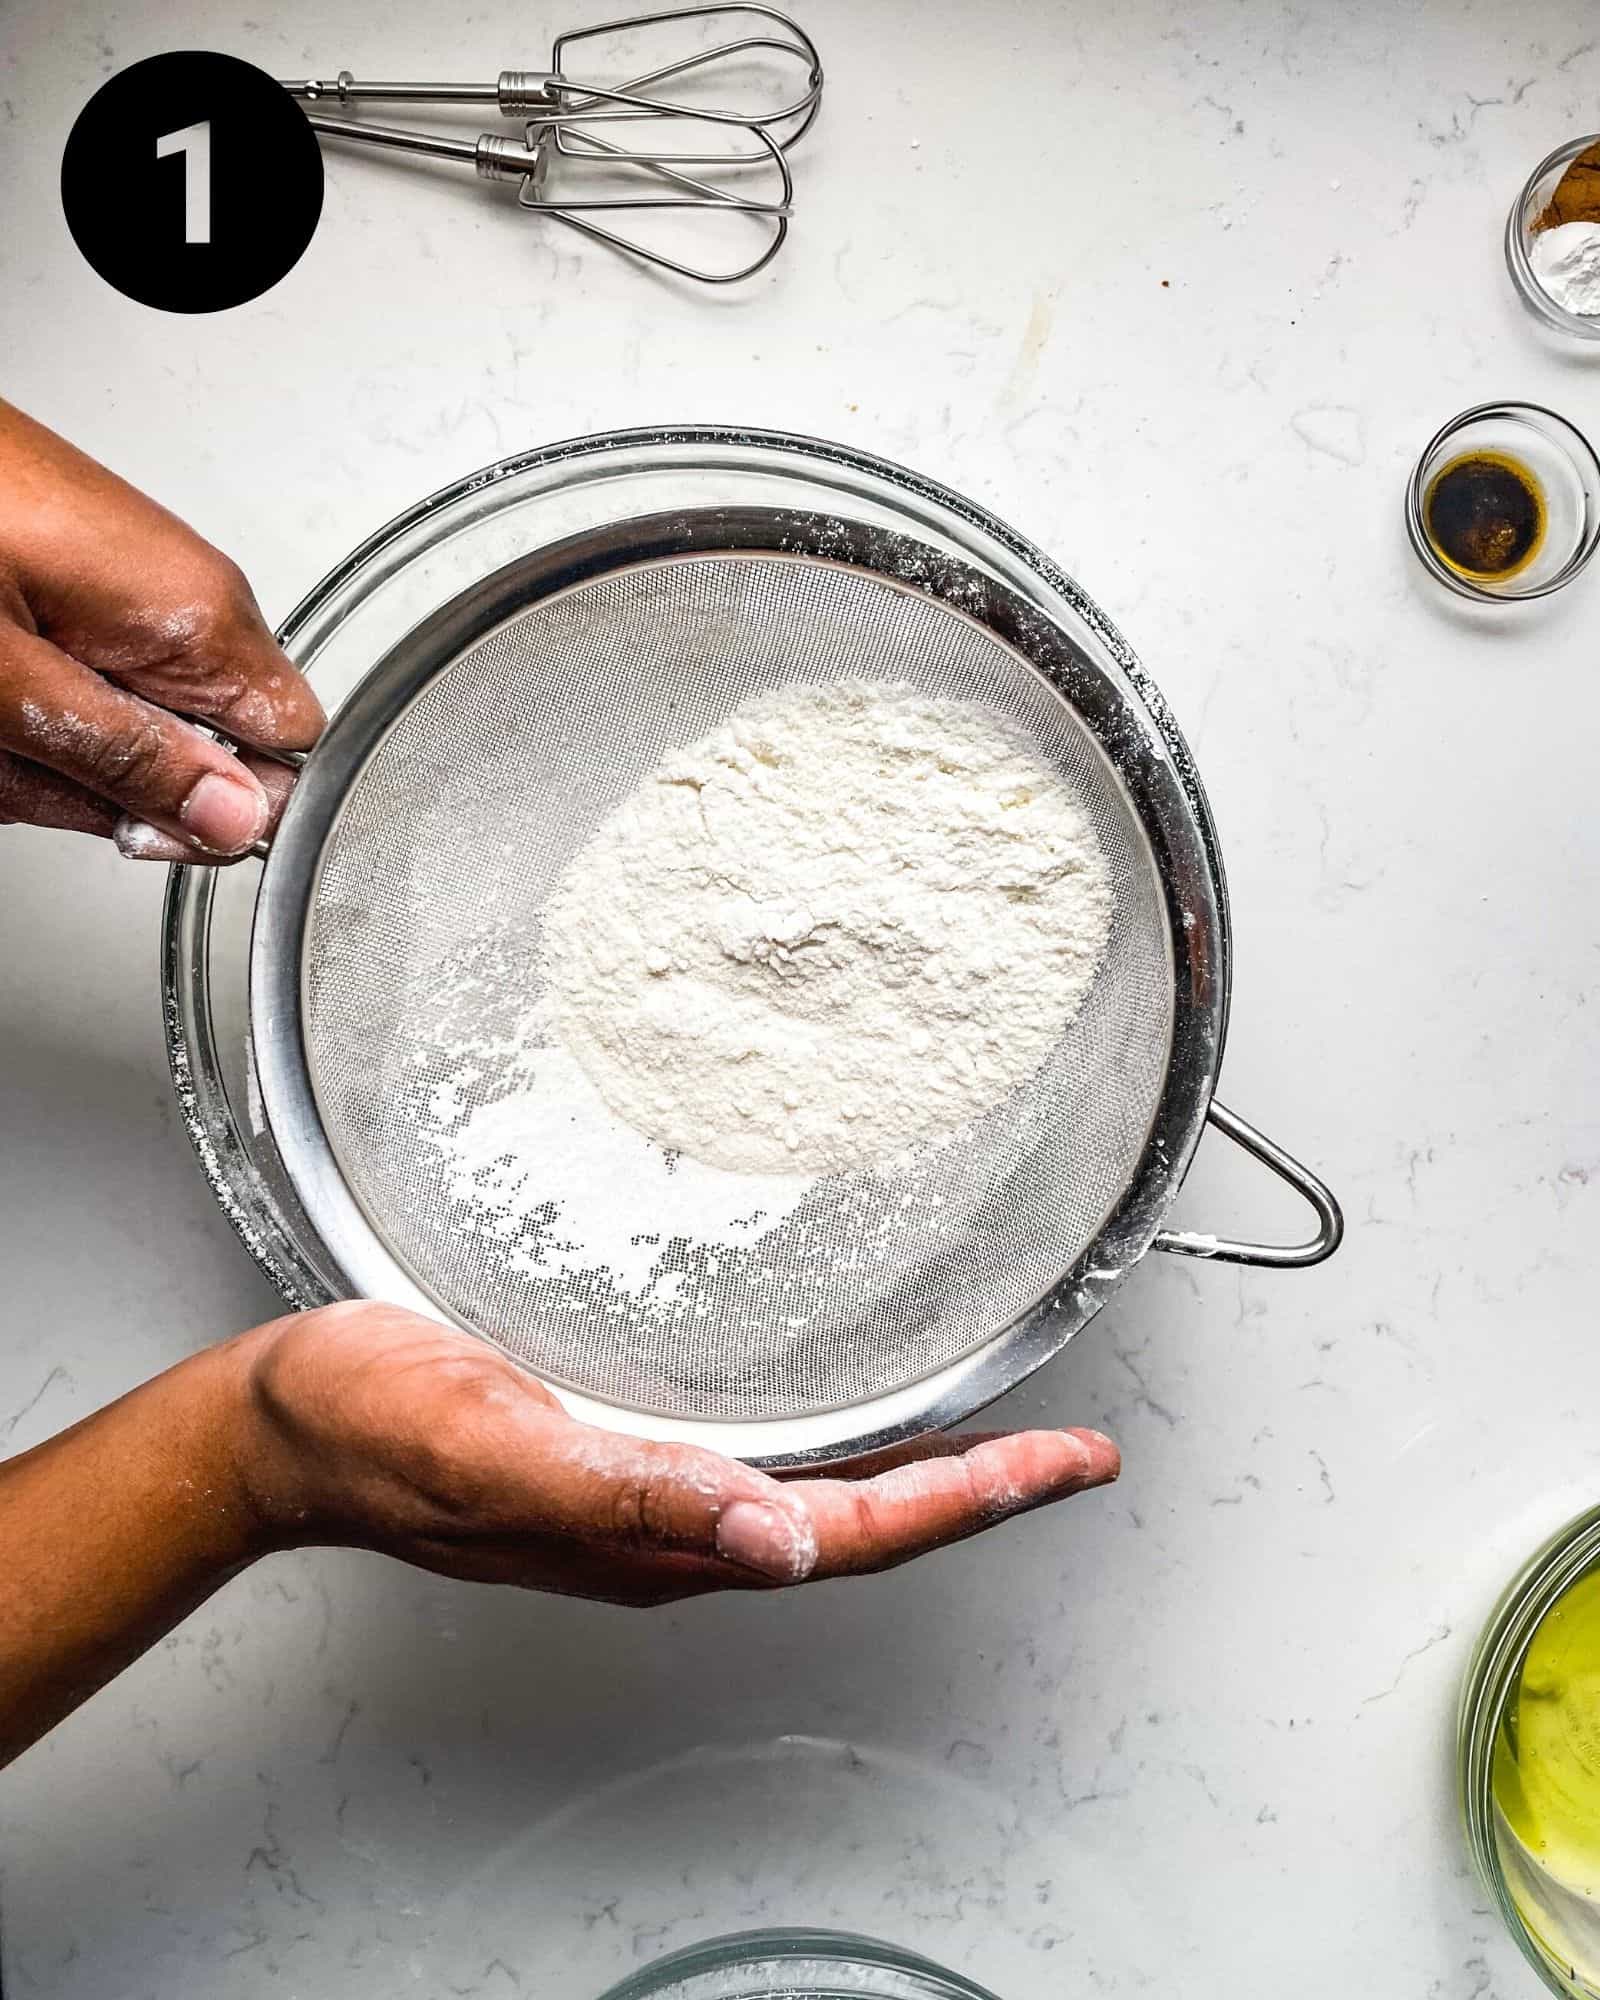 sifting almond flour into a bowl.